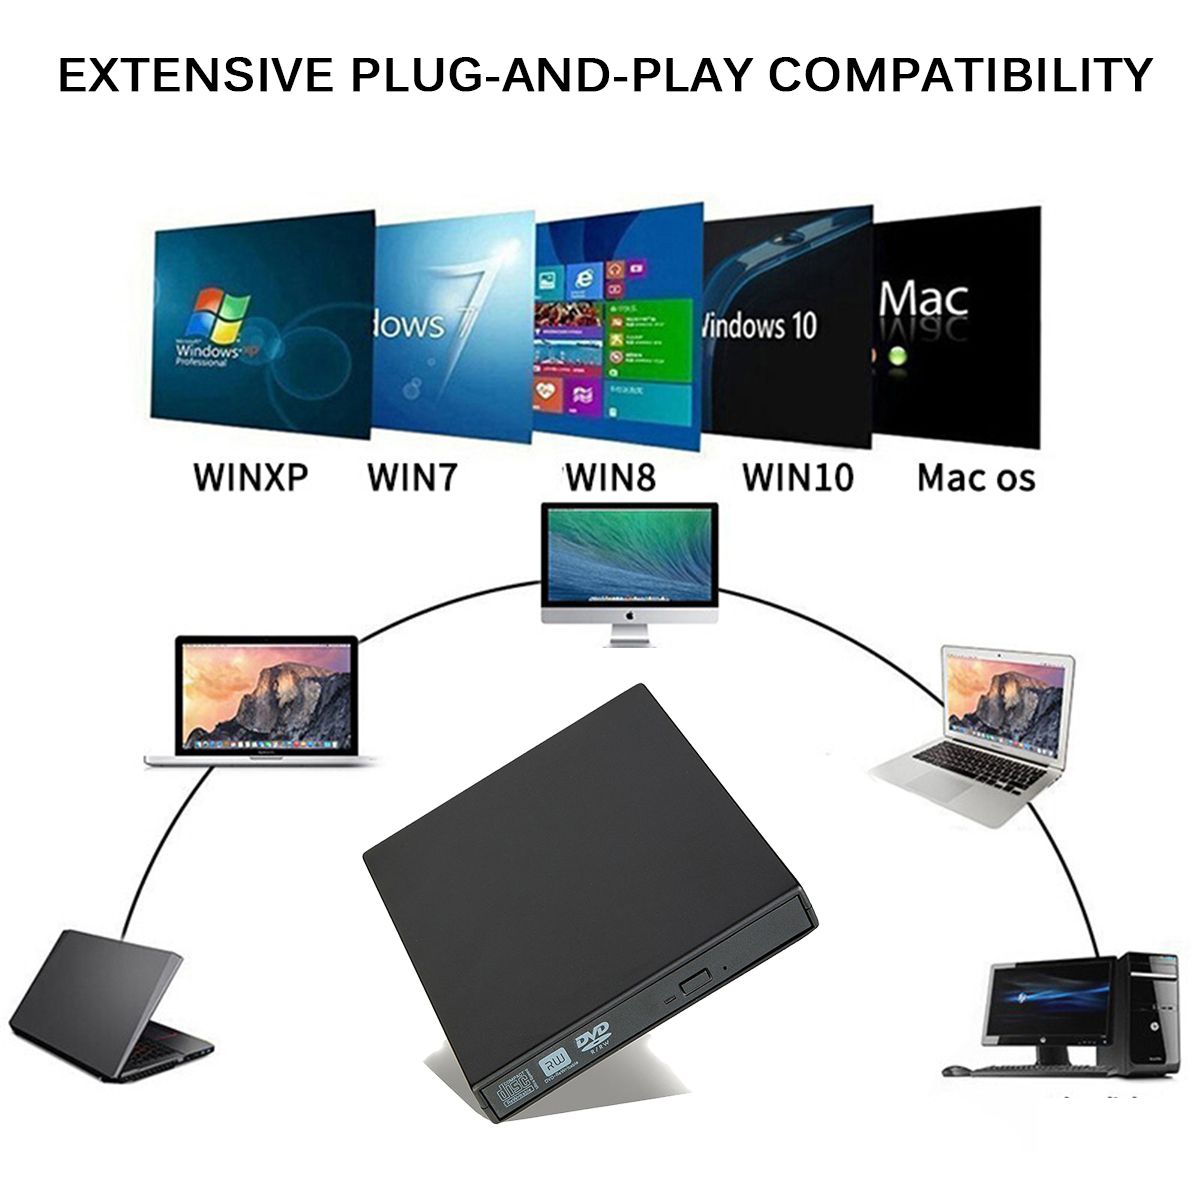 USB-30-External-Optical-Drive-DVD-RW-Player-CD-DVD-Burner-Writer-Rewriter-Data-Transfer-for-PC-Lapto-1753070